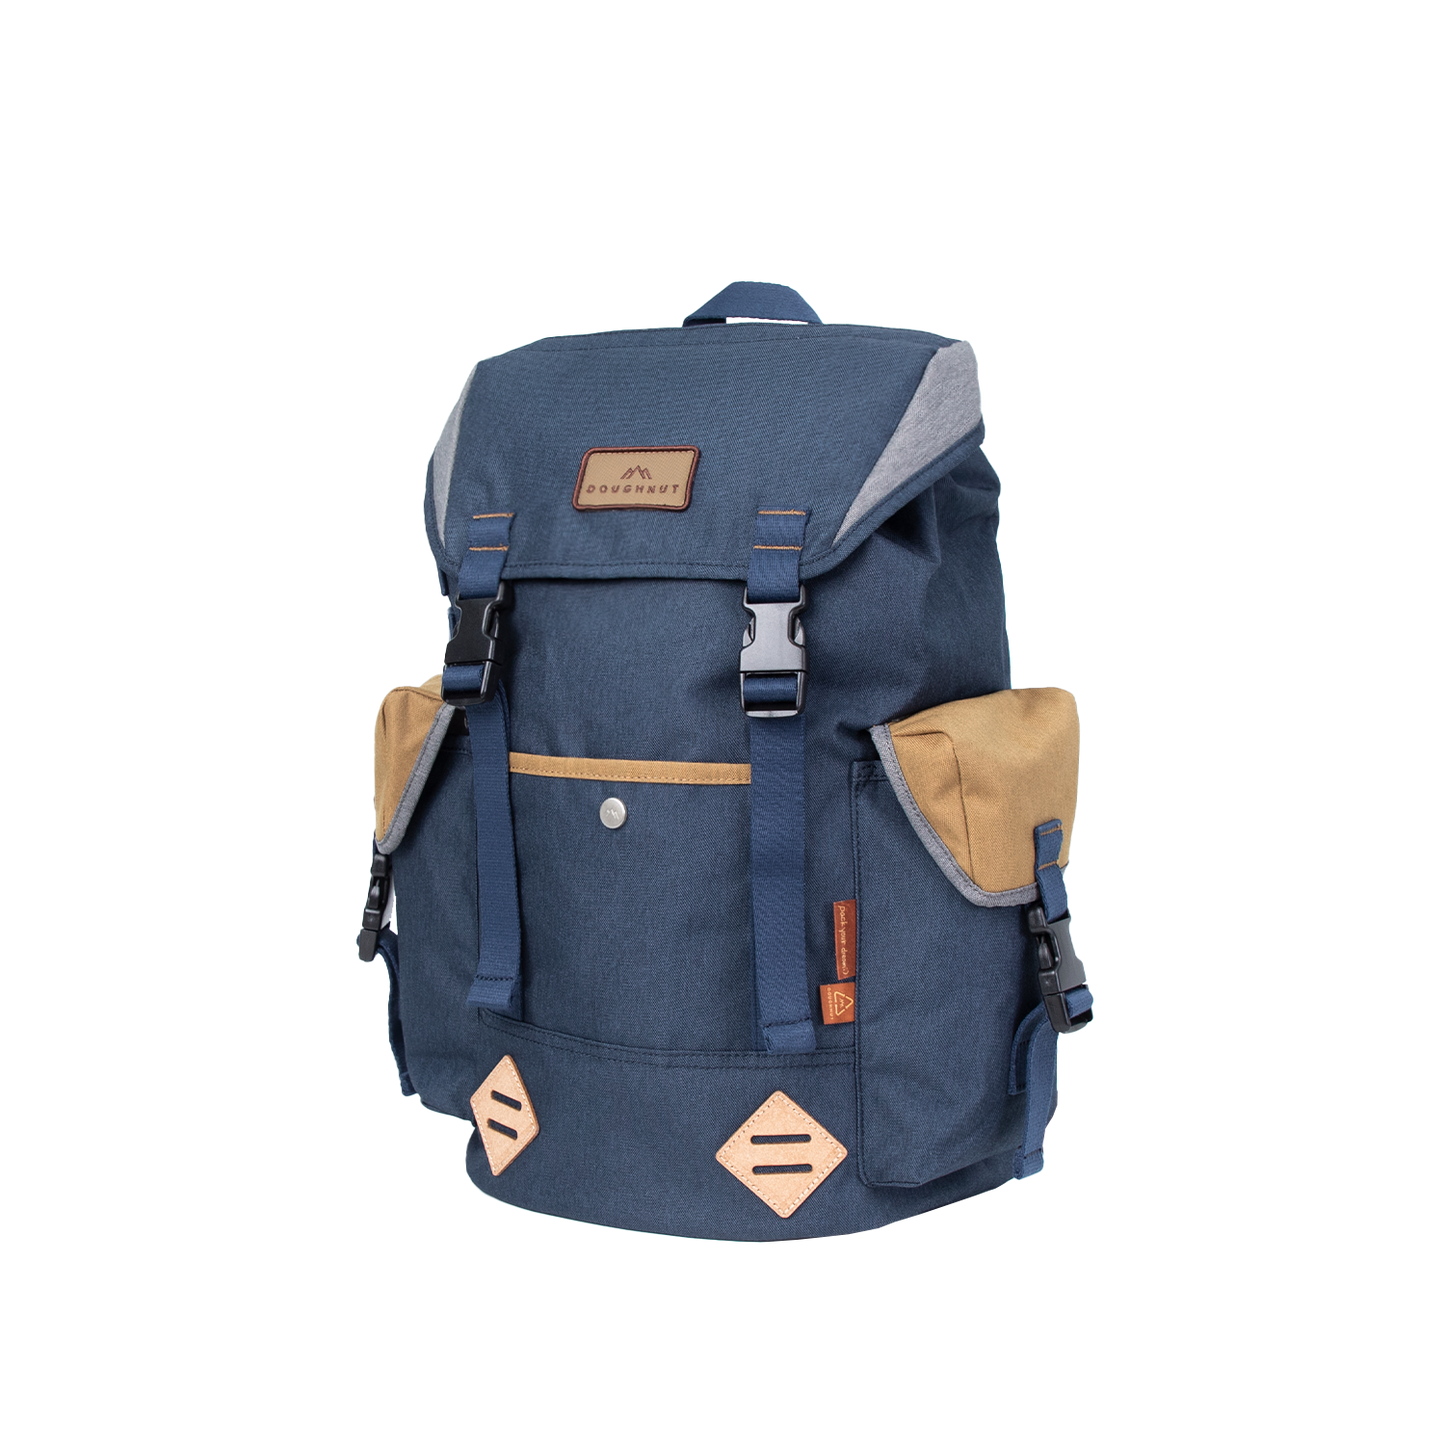 Grounder Happy Camper Series Backpack